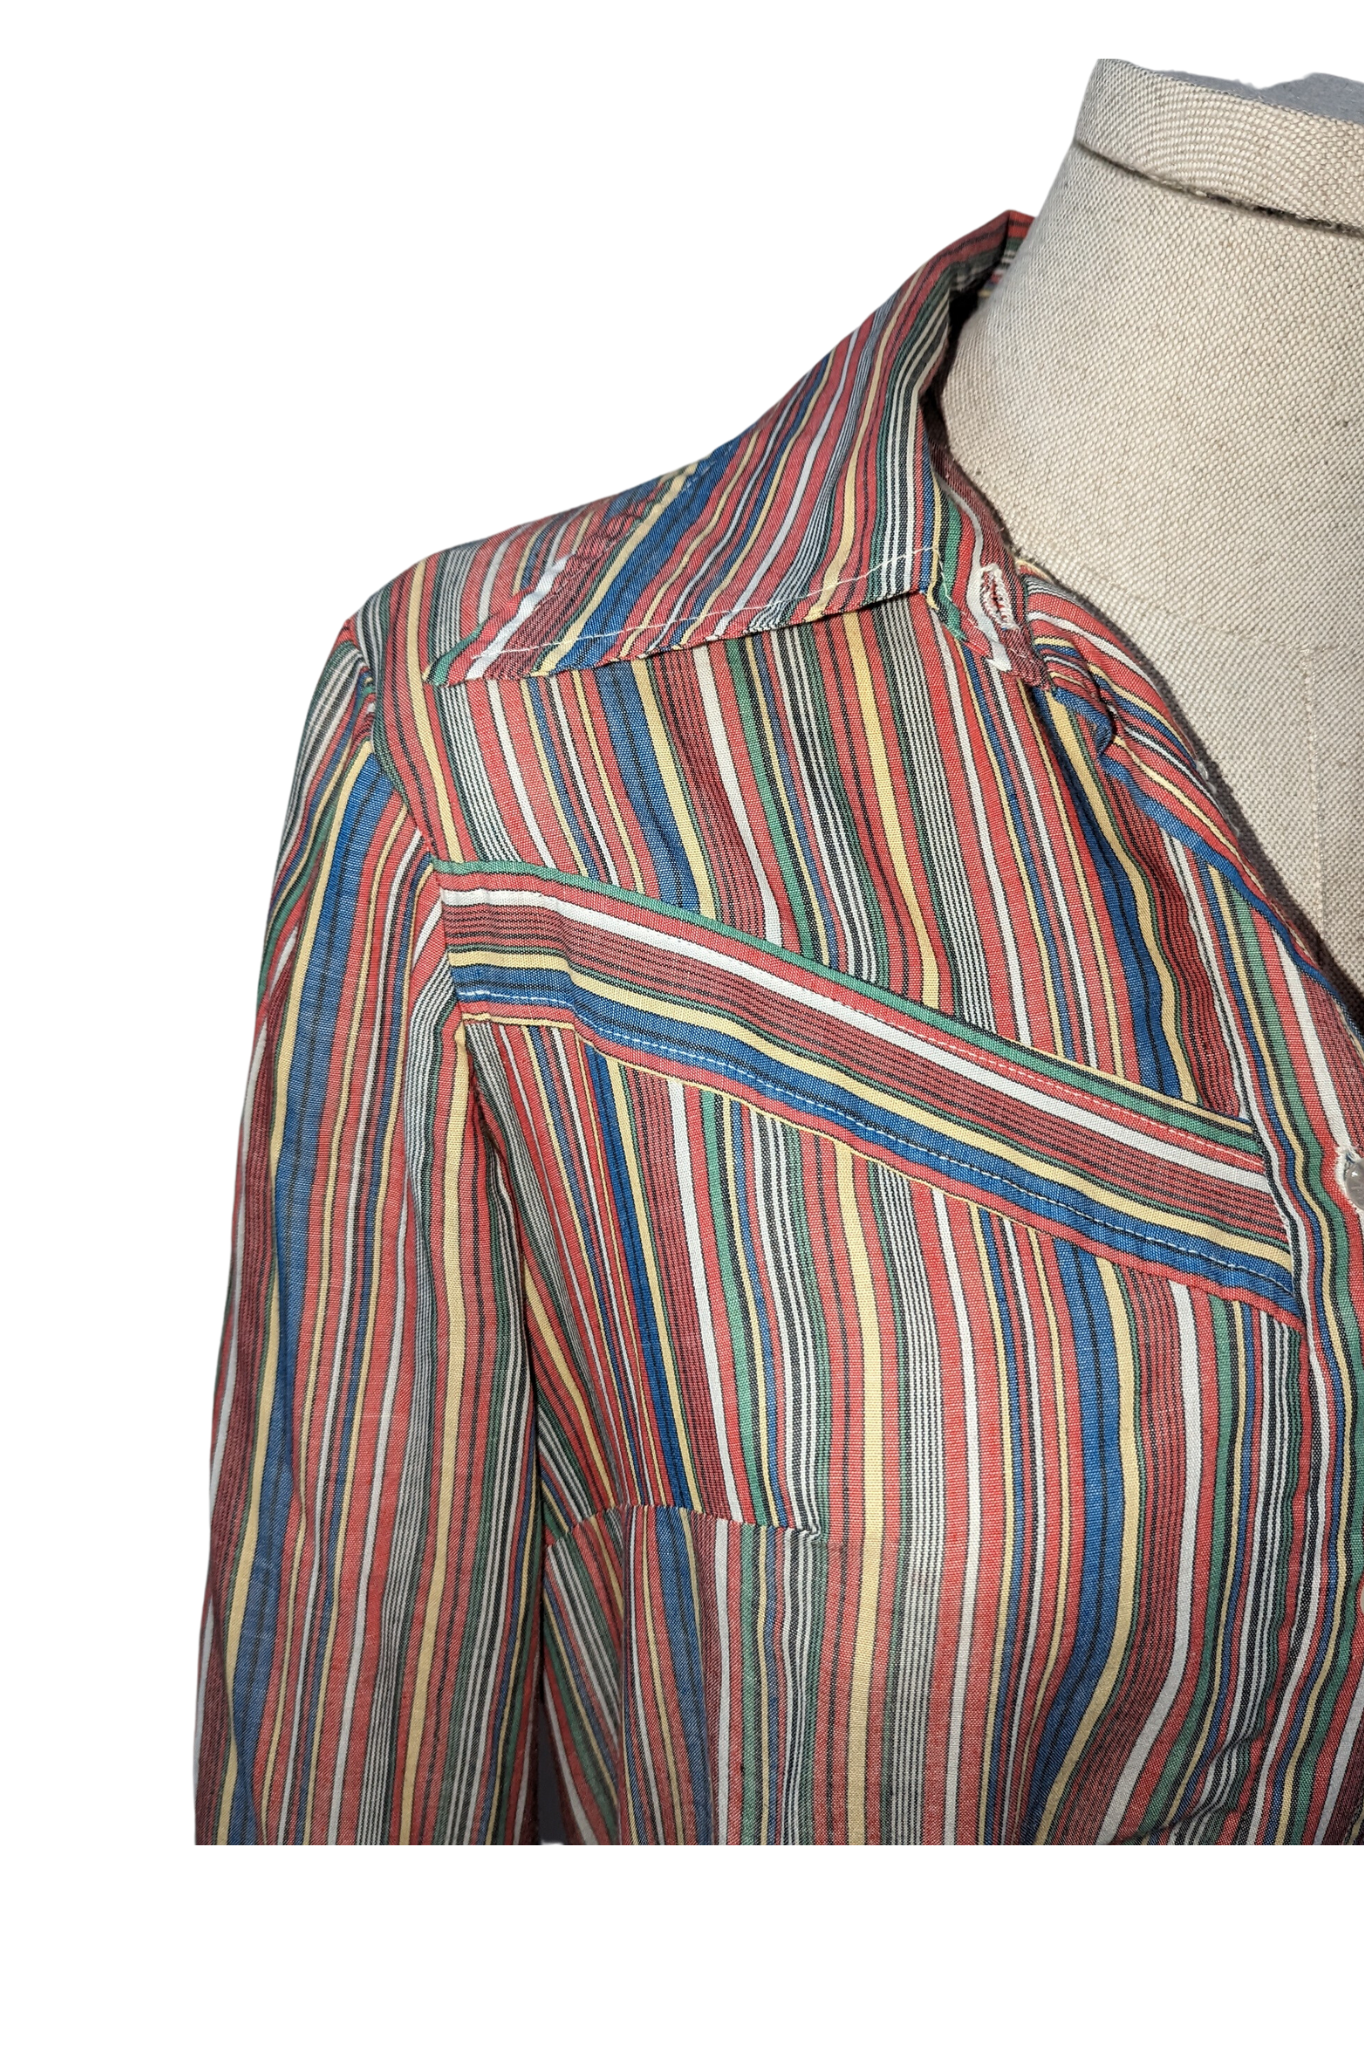 70s striped shirt dress